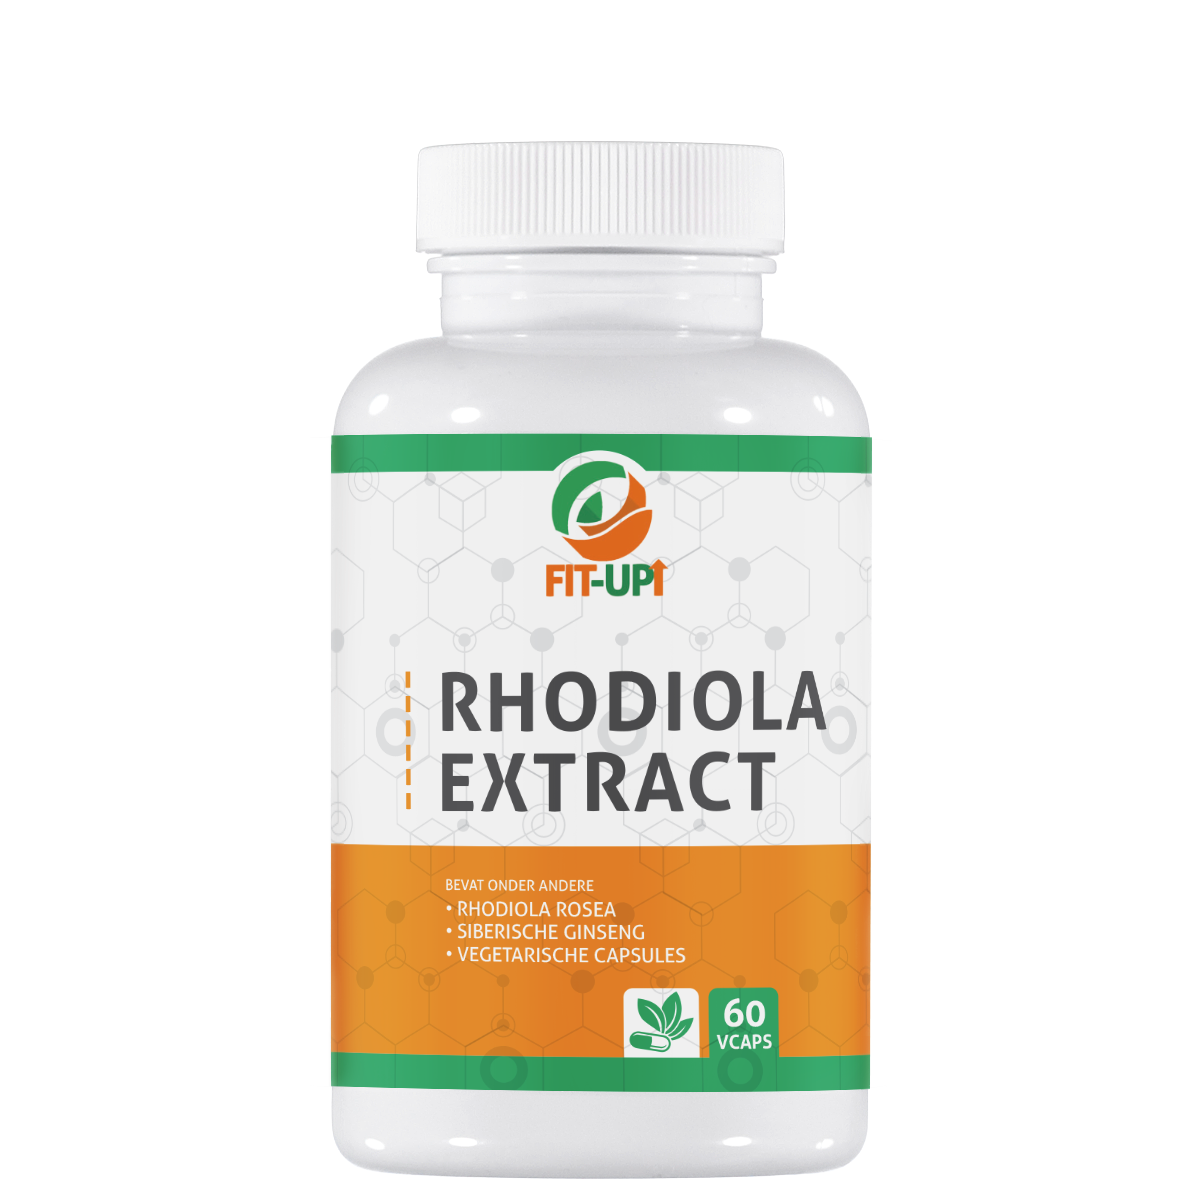 Rhodiola extract - 60 capsules